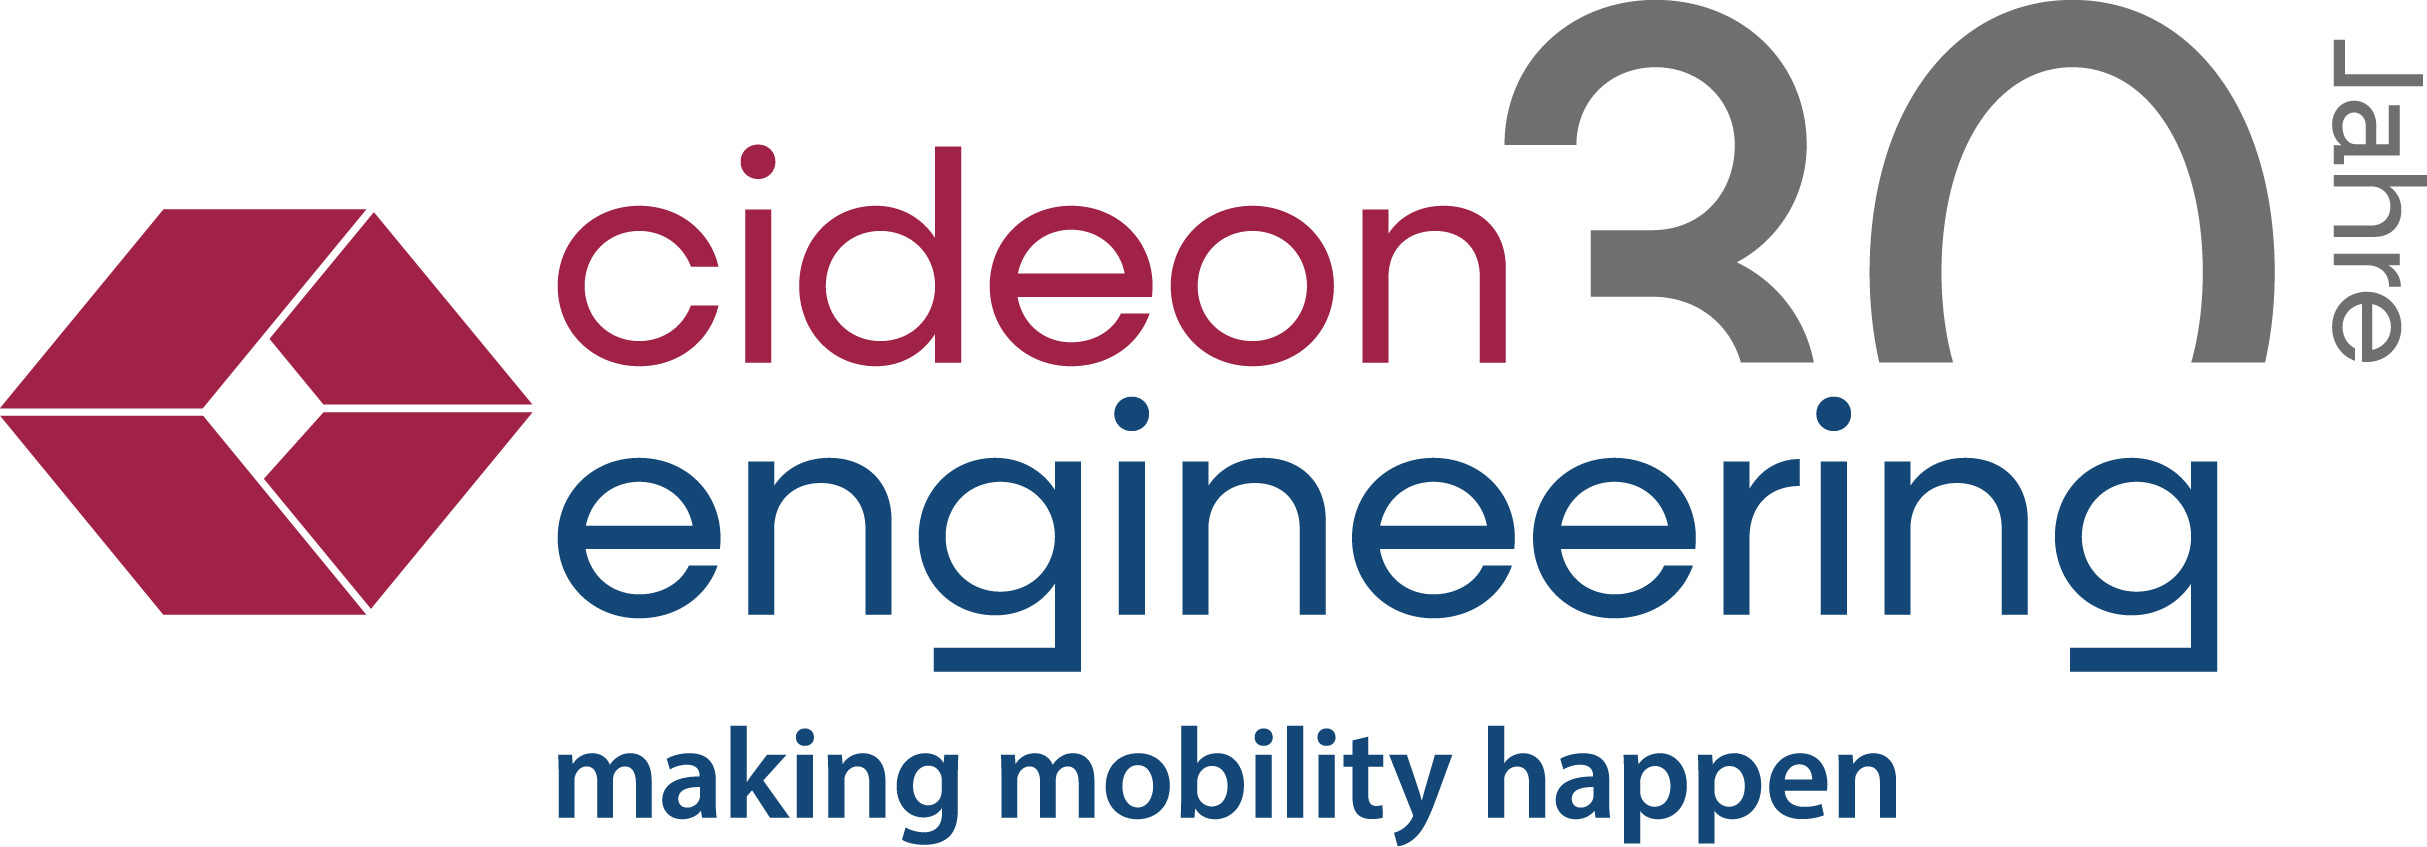 Logo CE cideon enginering